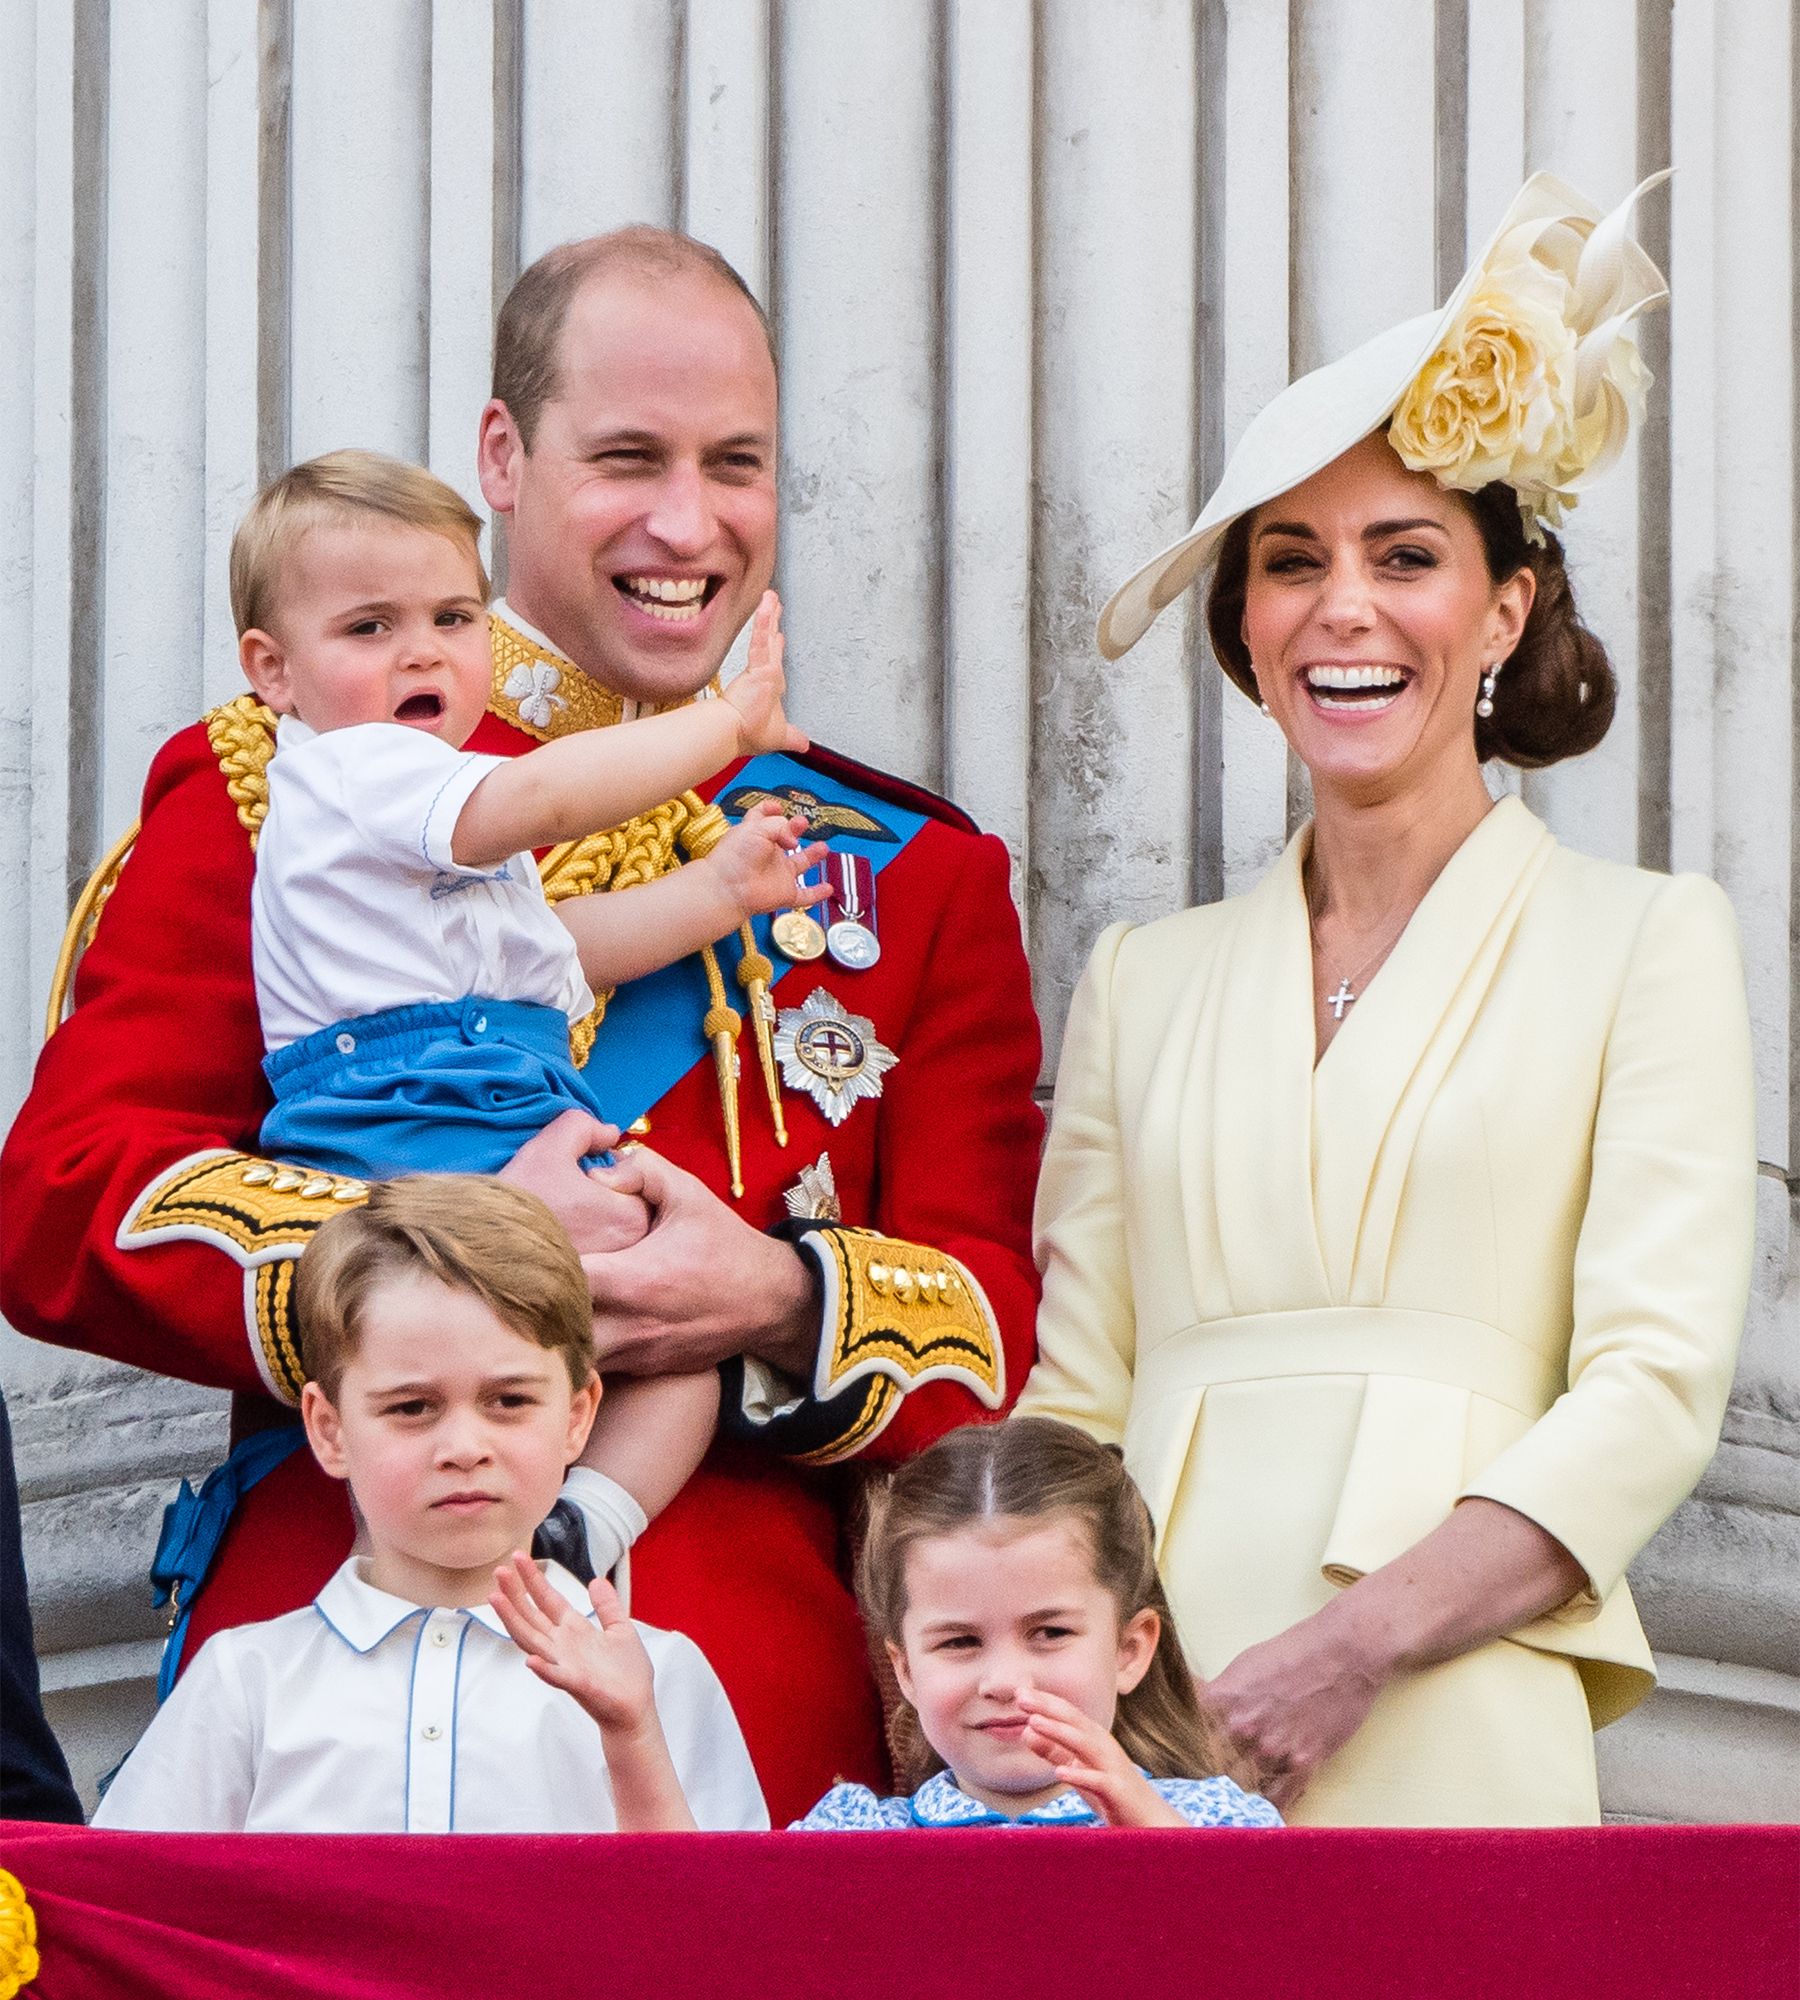 Necesitas un vestido amarillo: palabra de Kate Middleton